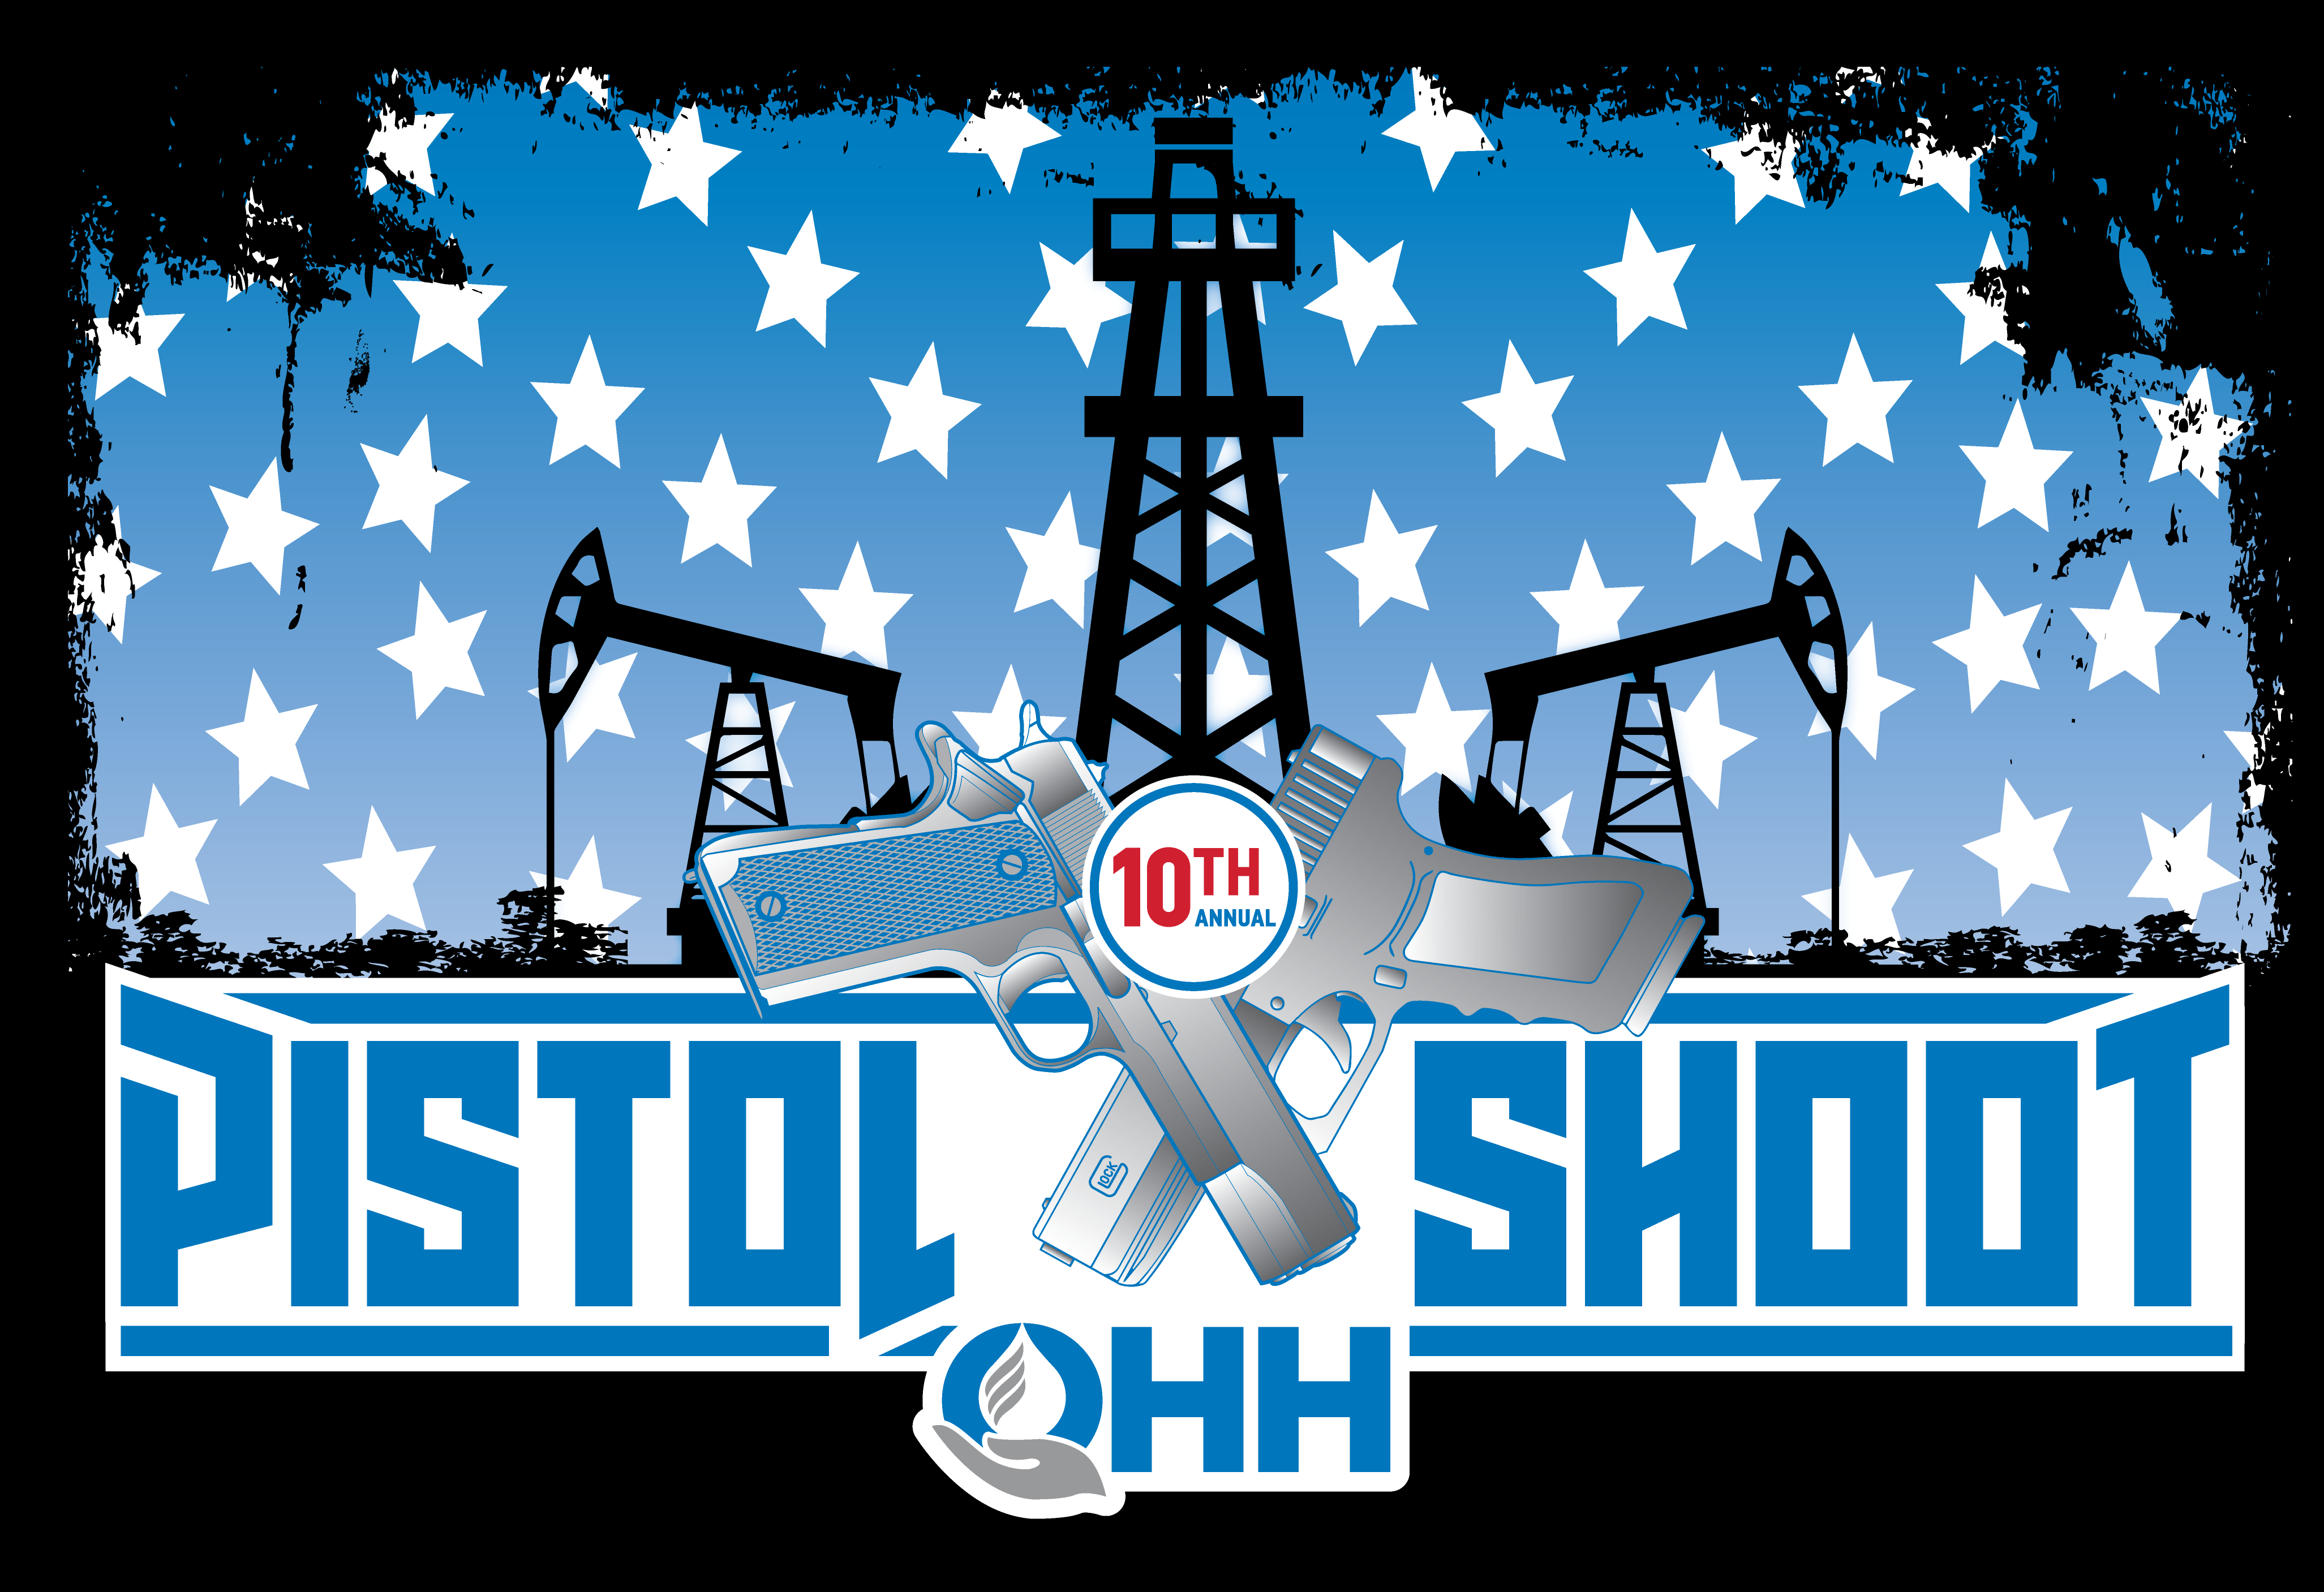 Helping Shoot Winter Houston Hands Pistol Fun Oilfield 10th - Annual